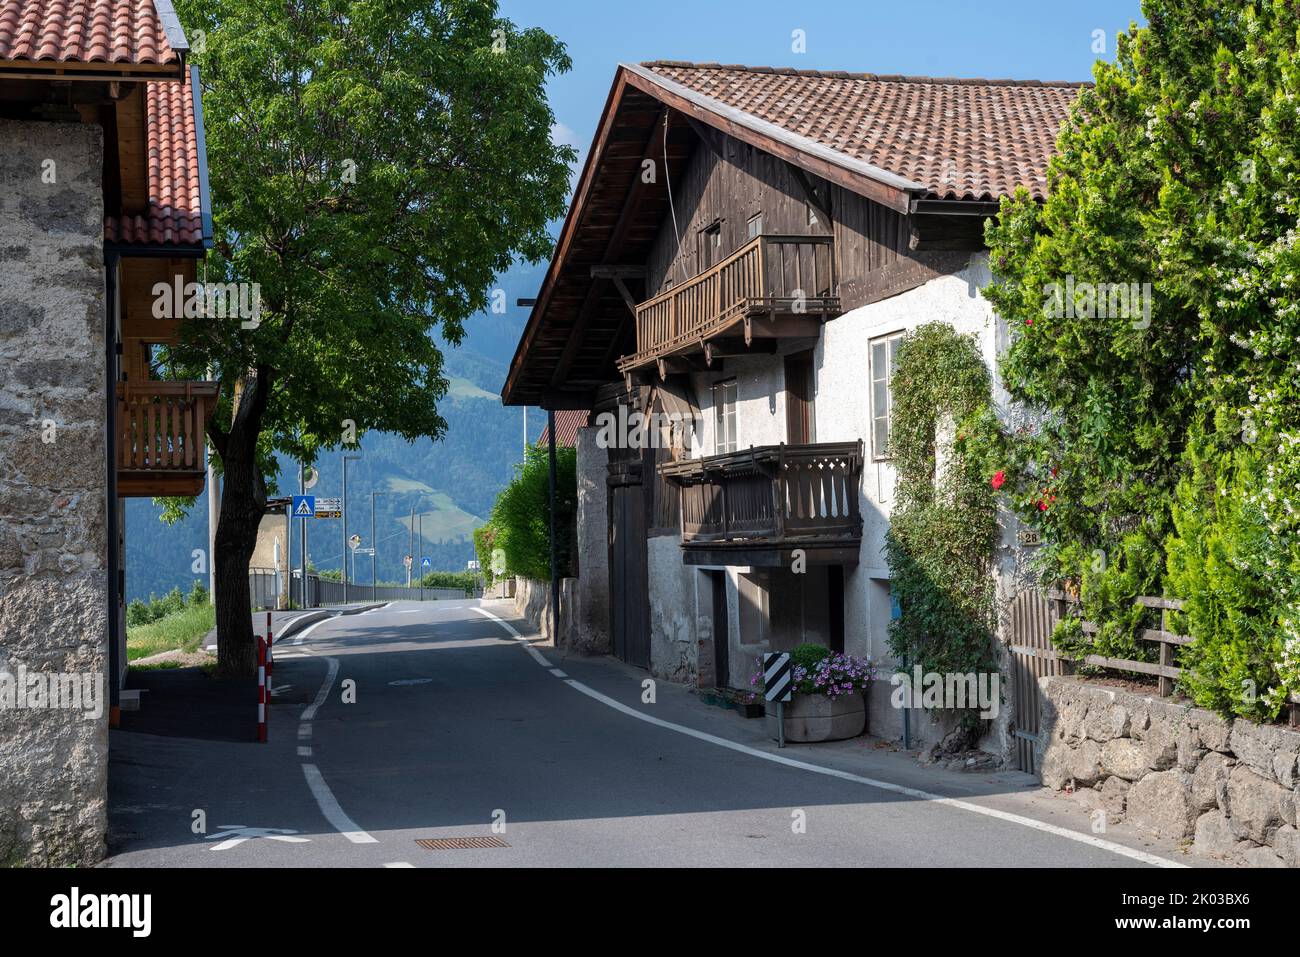 Case residenziali, strade, Parcines, Alto Adige, Italia Foto Stock